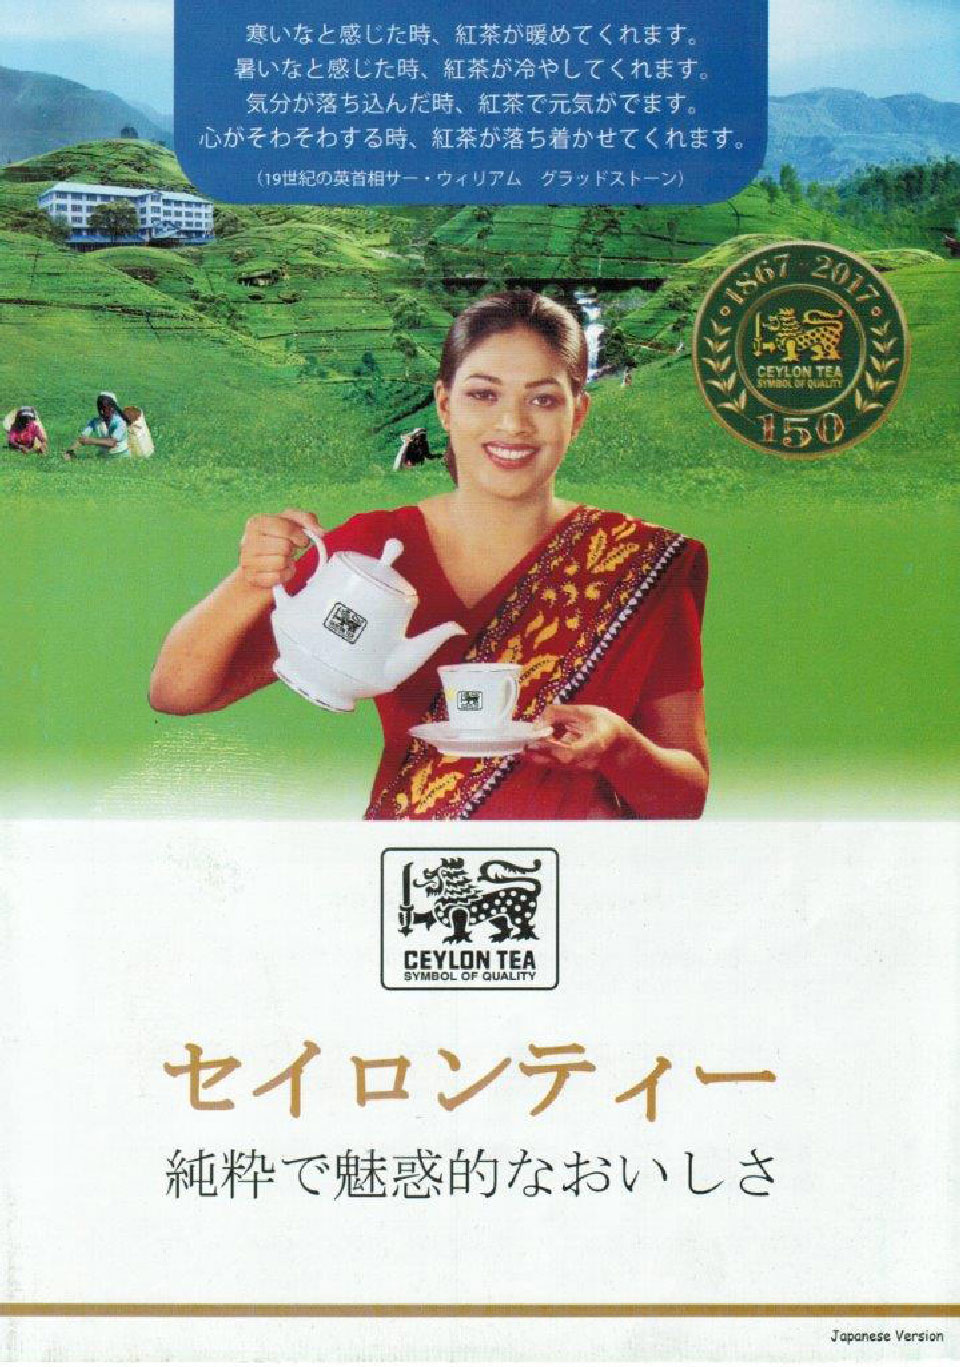 Ceylon Tea at Sri Lanka festival Japan